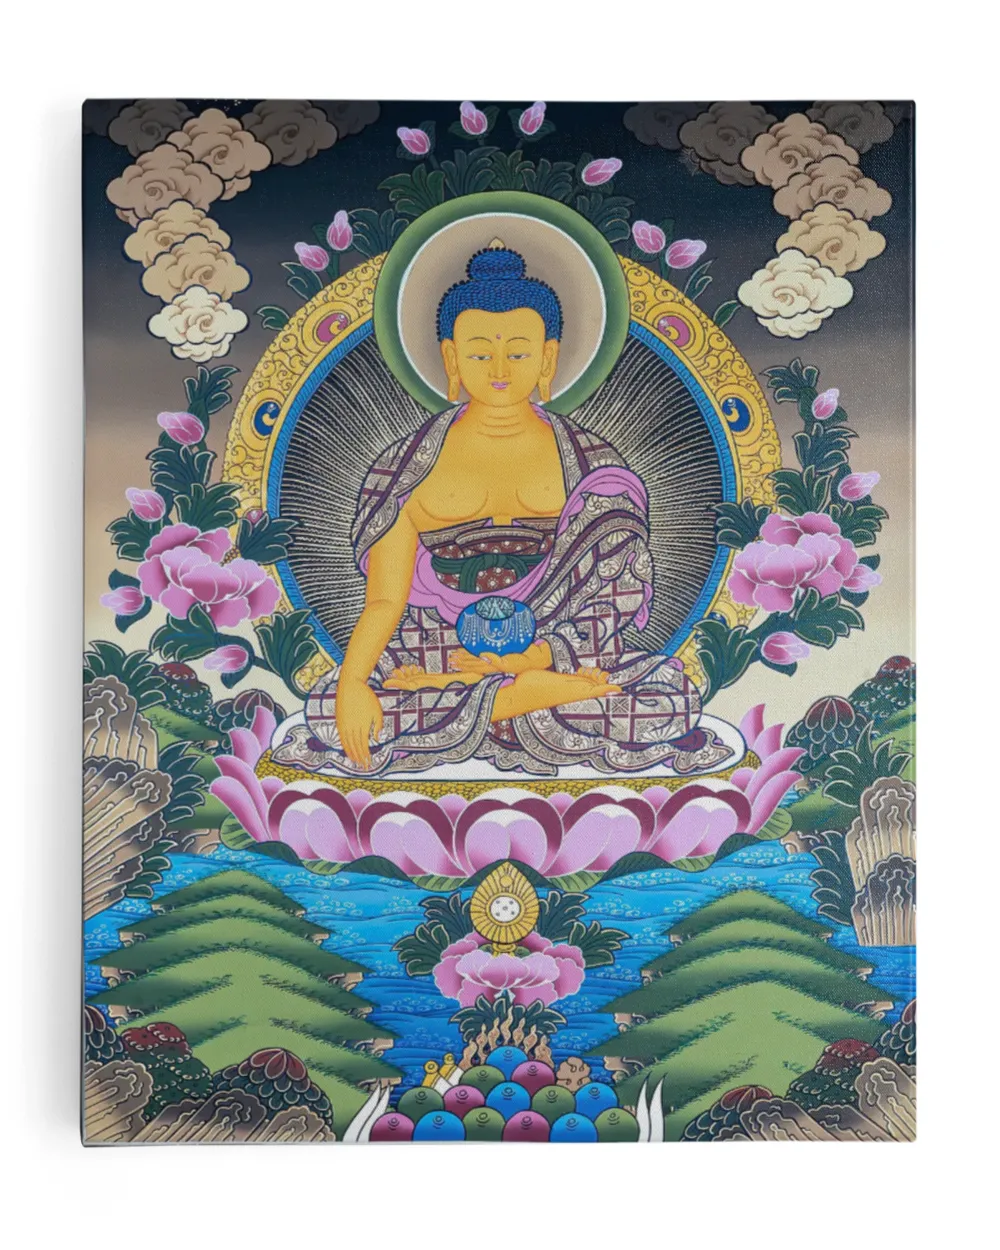 Shakyamuni Buddha Awakening Meditation for Enlightenment 01